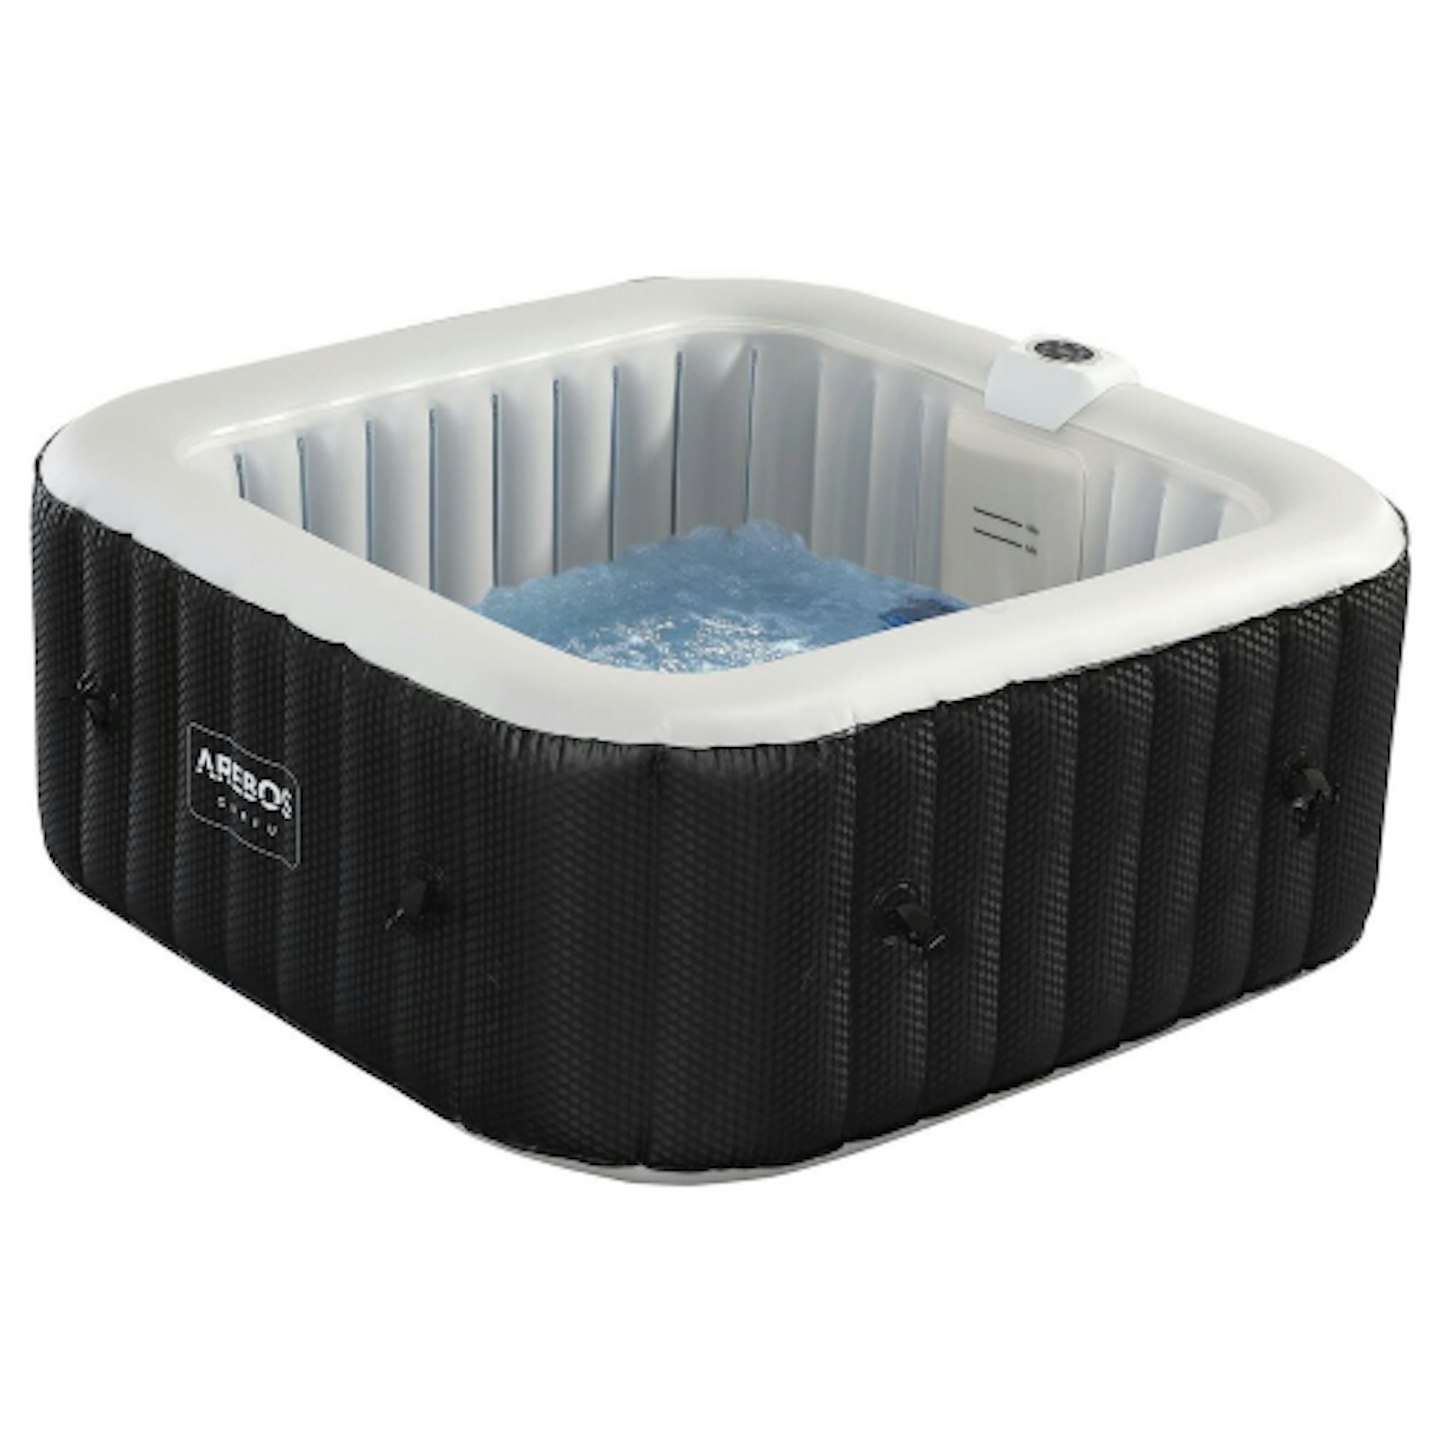 Arebos hot tub 